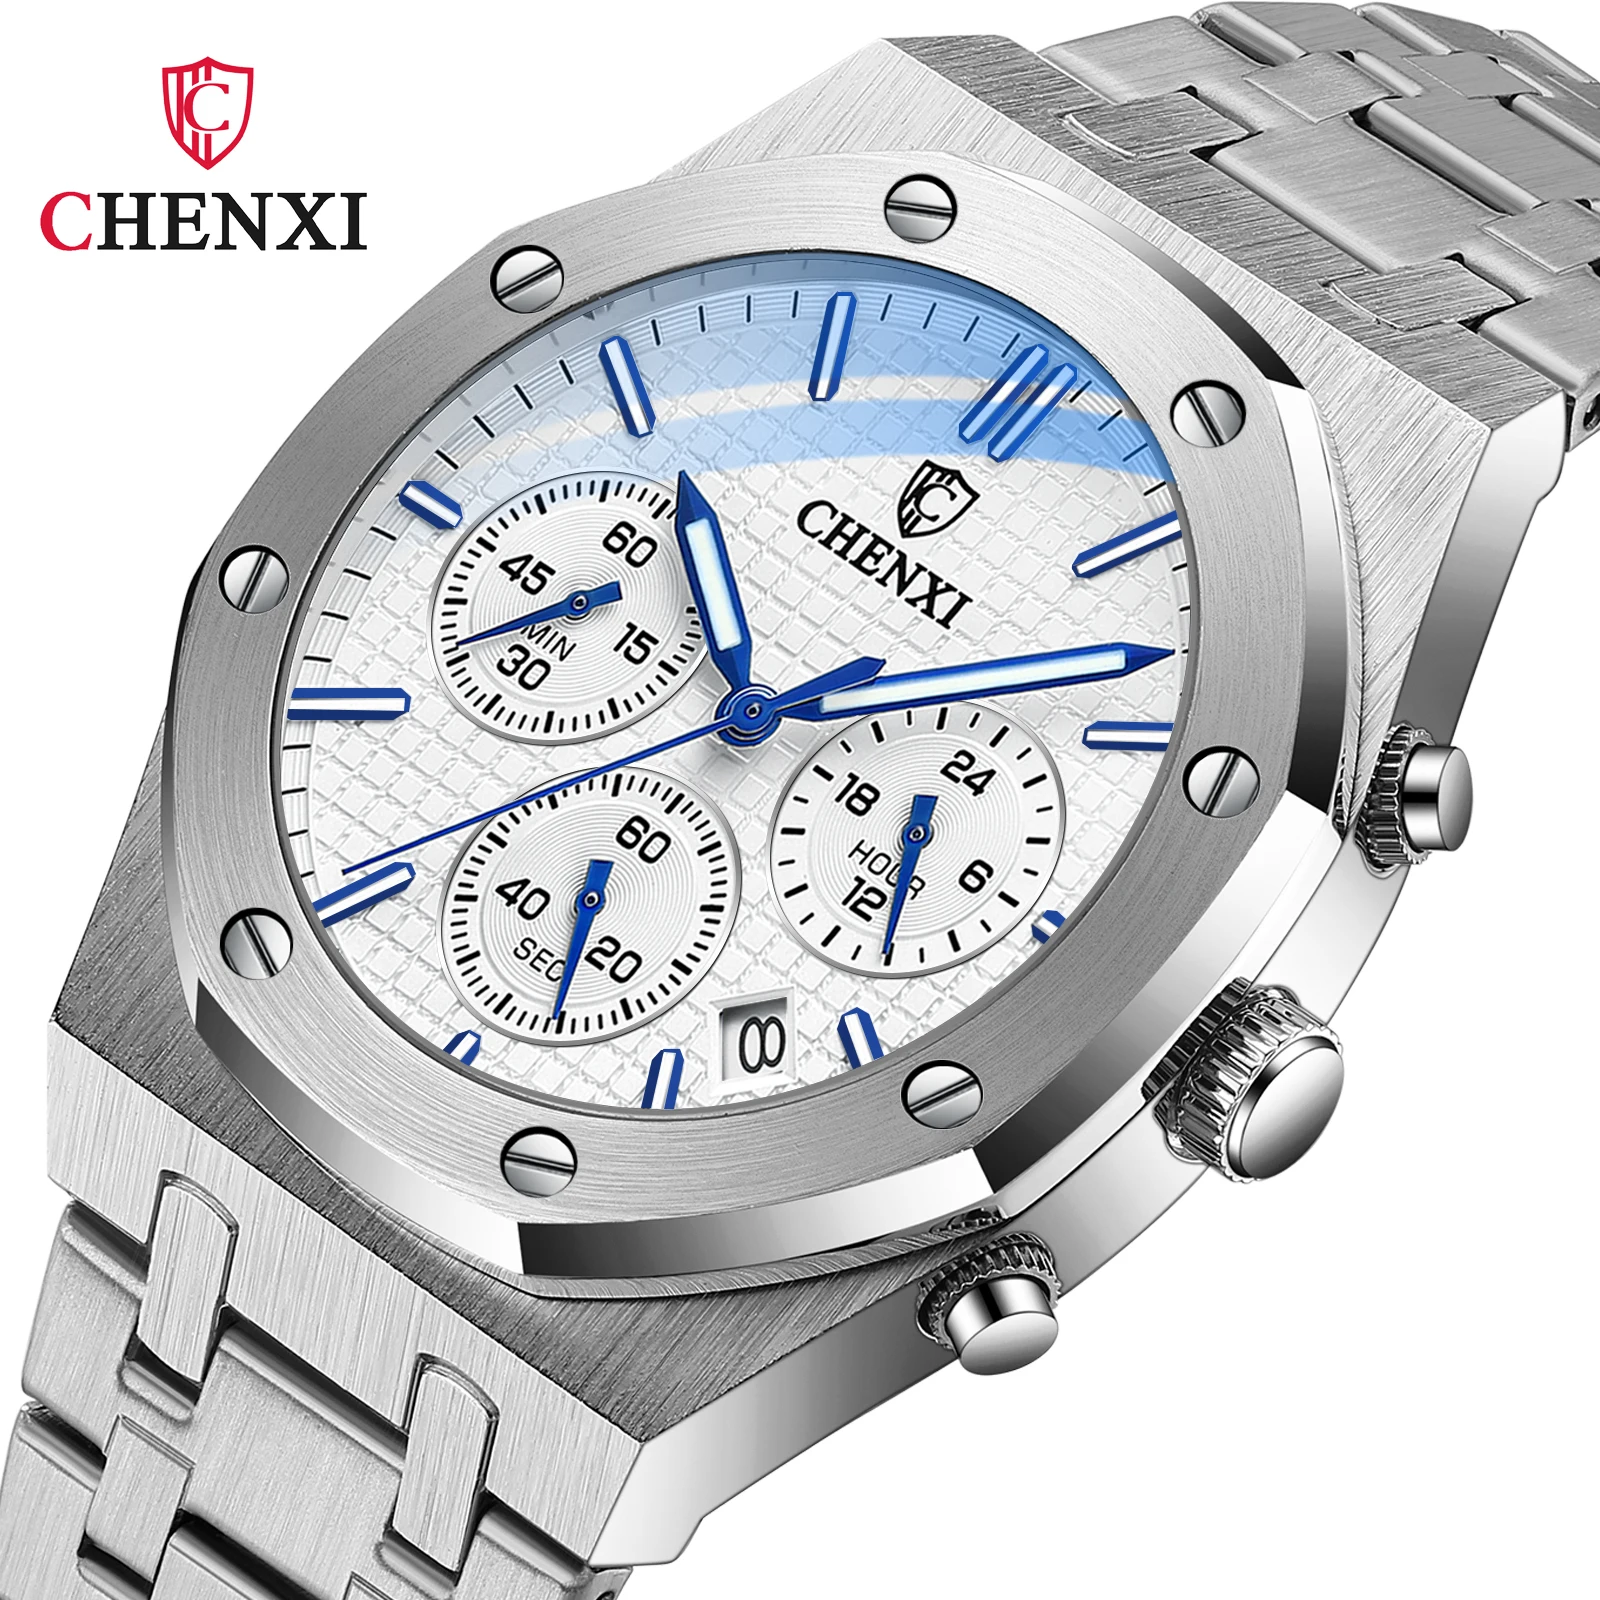 CHENXI-reloj analógico de acero inoxidable para hombre, accesorio de pulsera de cuarzo resistente al agua con cronógrafo, complemento Masculino de marca de lujo perfecto para negocios, 948